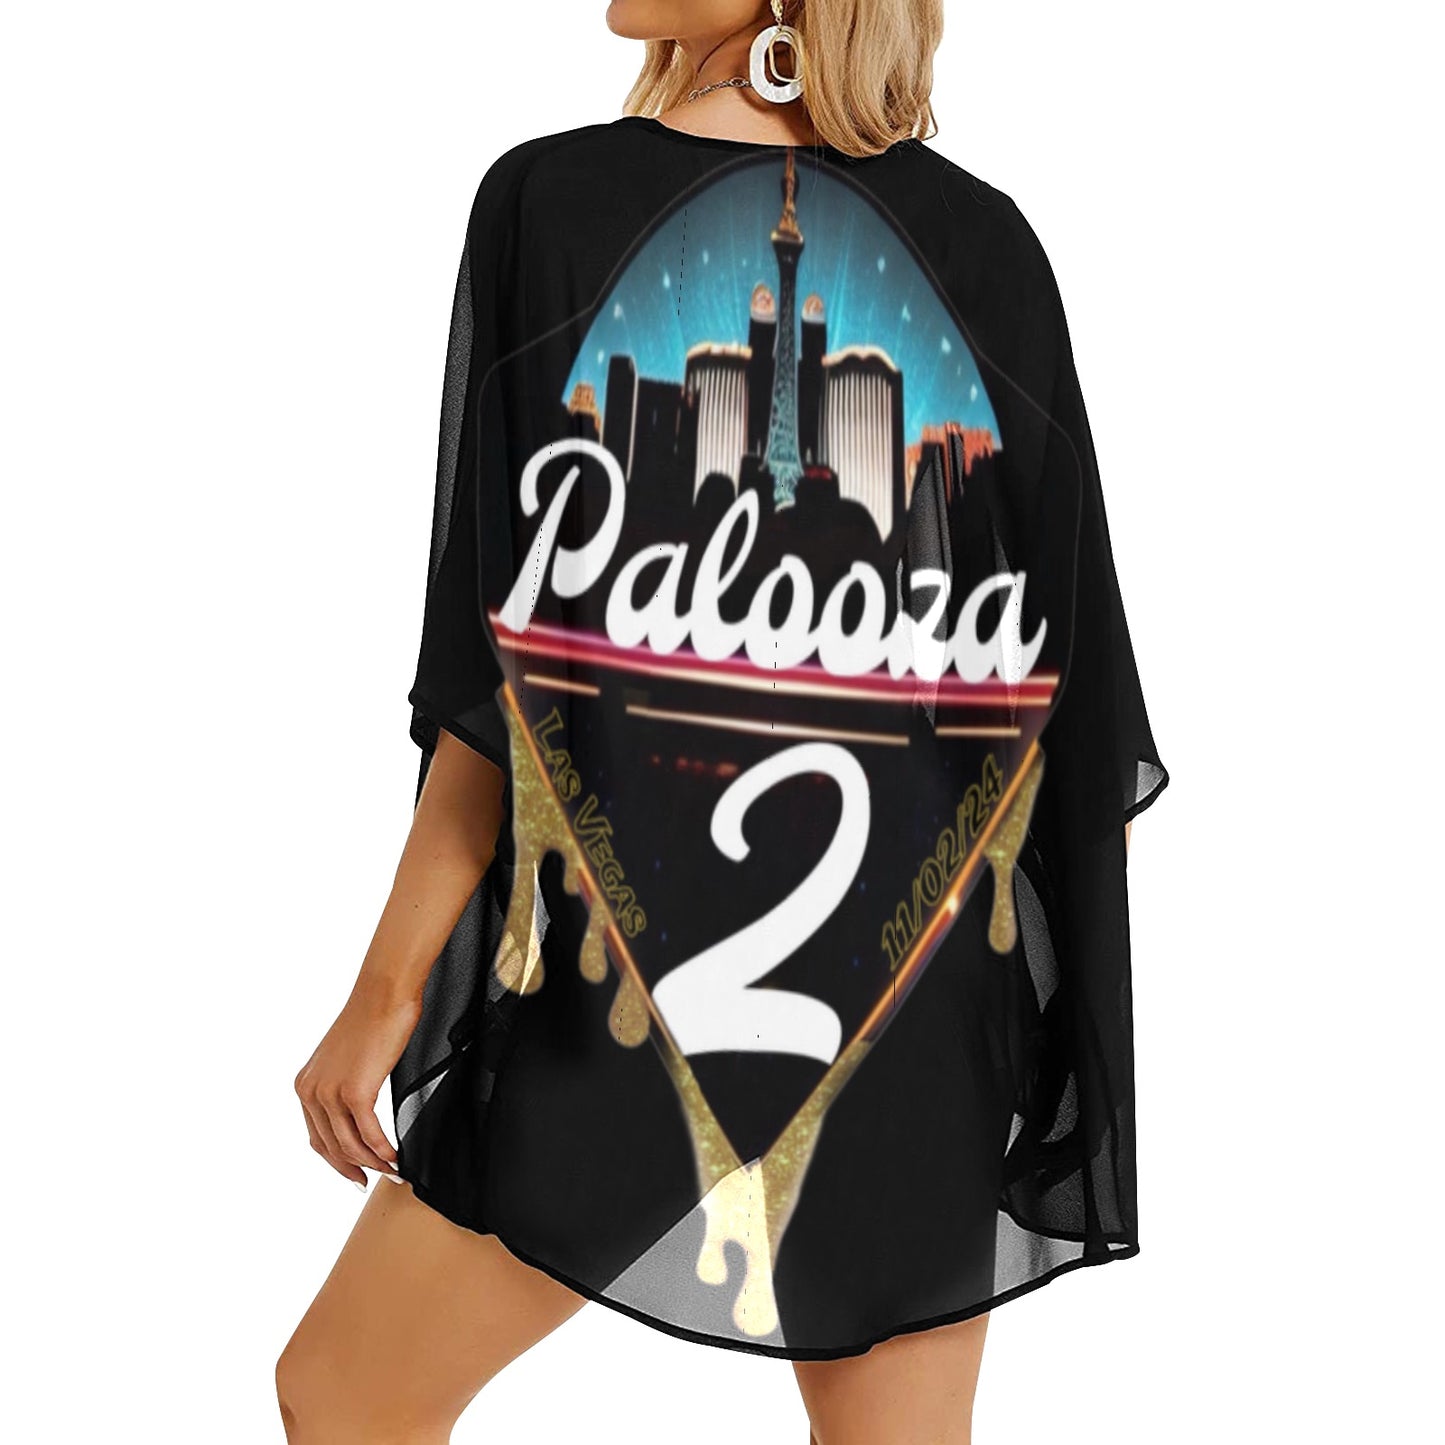 Official Palooza 2 Merch (Women’s Kimono Chiffon Cover Up)